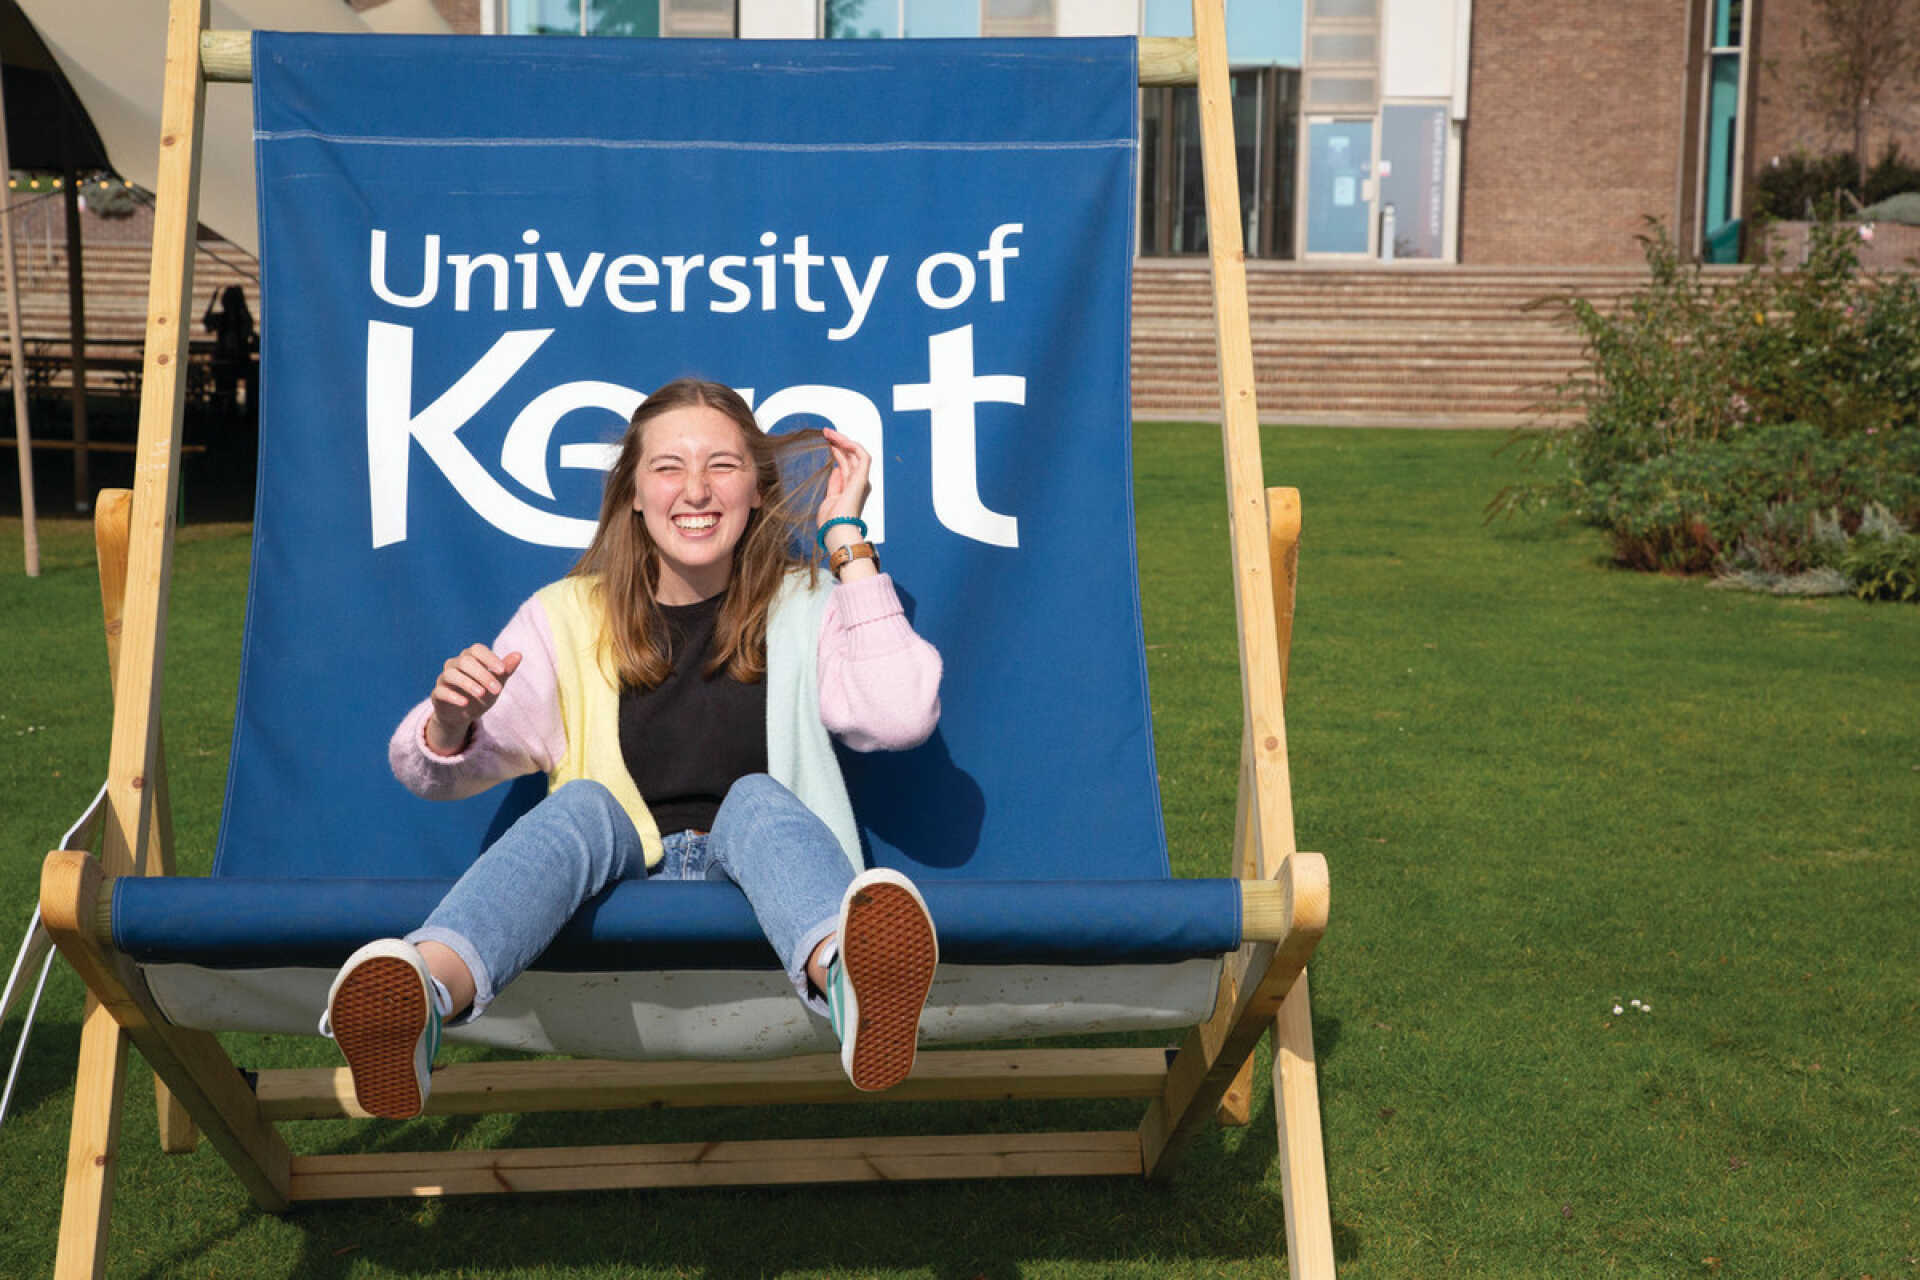 Student on Kent branded deckchair